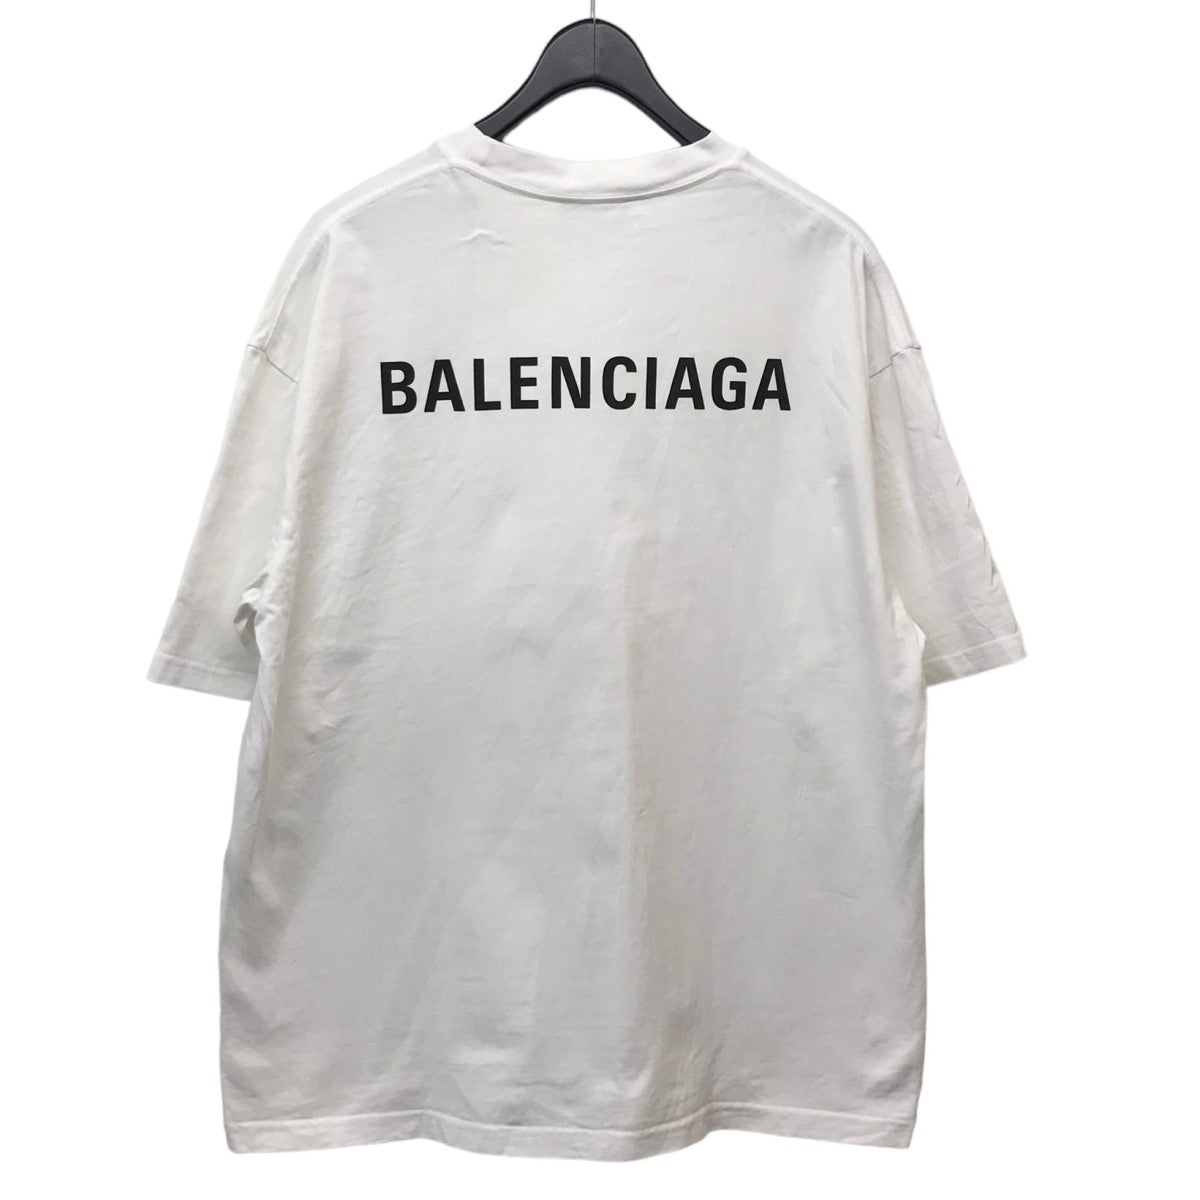 BALENCIAGA(バレンシアガ) ロゴTシャツ612966 TIVG5 612966 TIVG5 